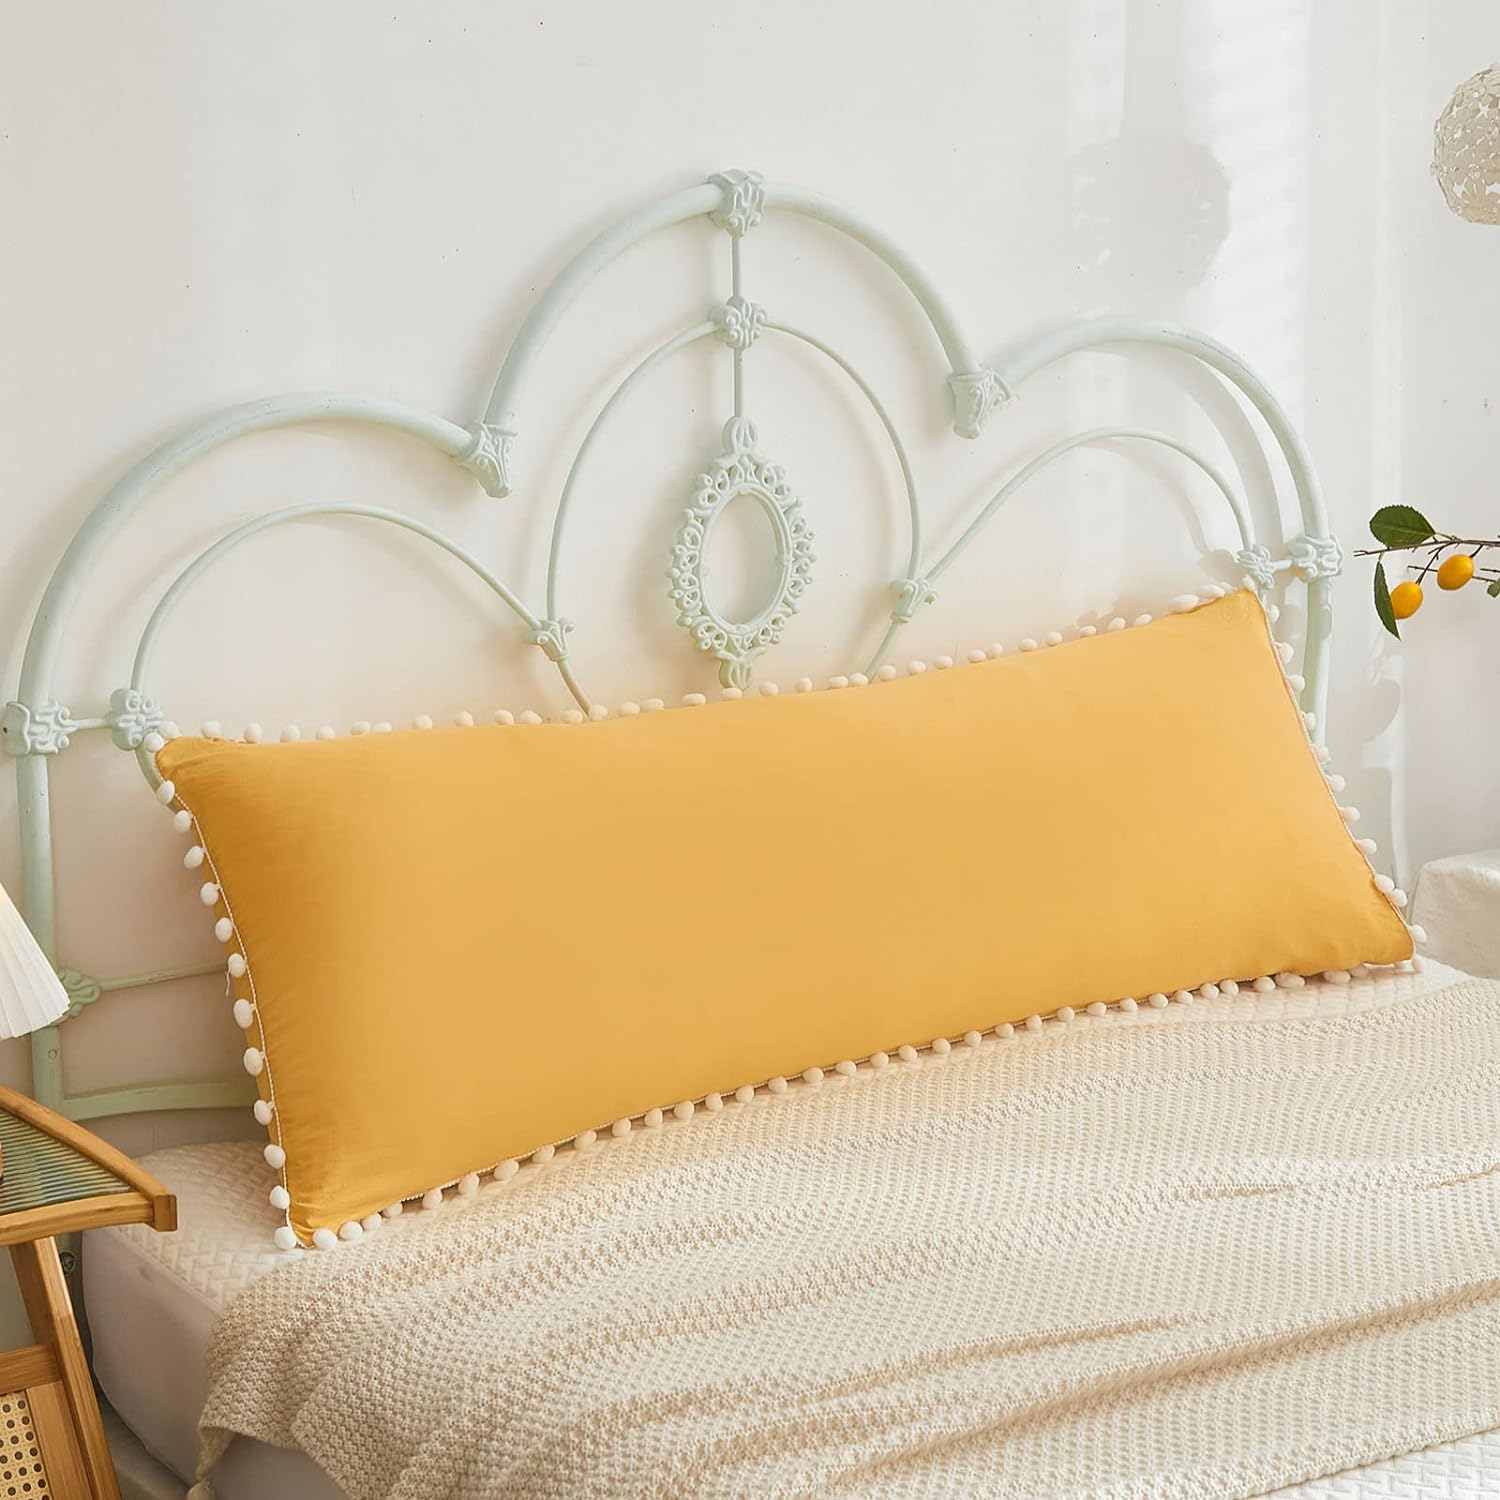 Bedbay Yellow Pillowcases,Body Pillow Cases,Boho Pillowcases,White Pom Poms Fringe Pillow Cases of 2, Soft Microfiber Pillow Cover,1 PC Home Decorative Body Pillow Cases(Yellow,Body(20''x54''))